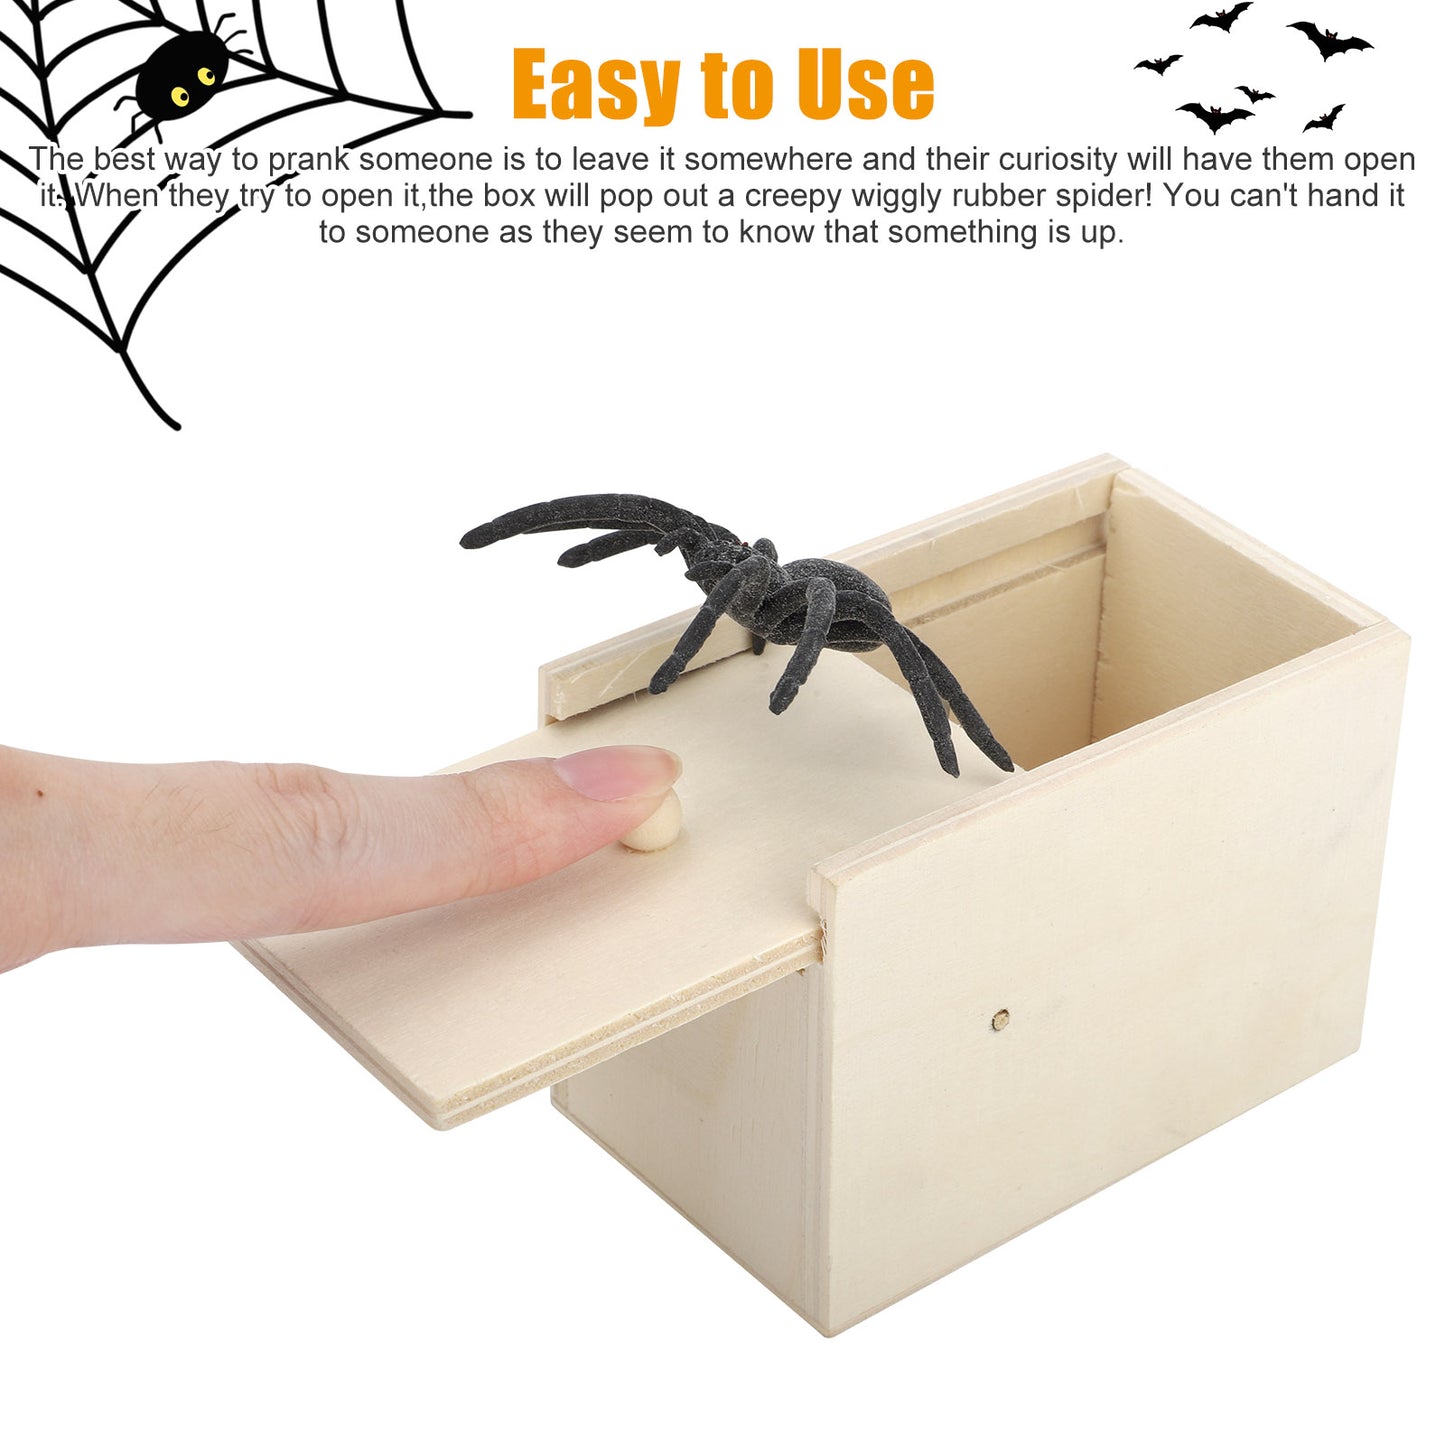 2 Pcs Spider Scare Prank Box Wooden